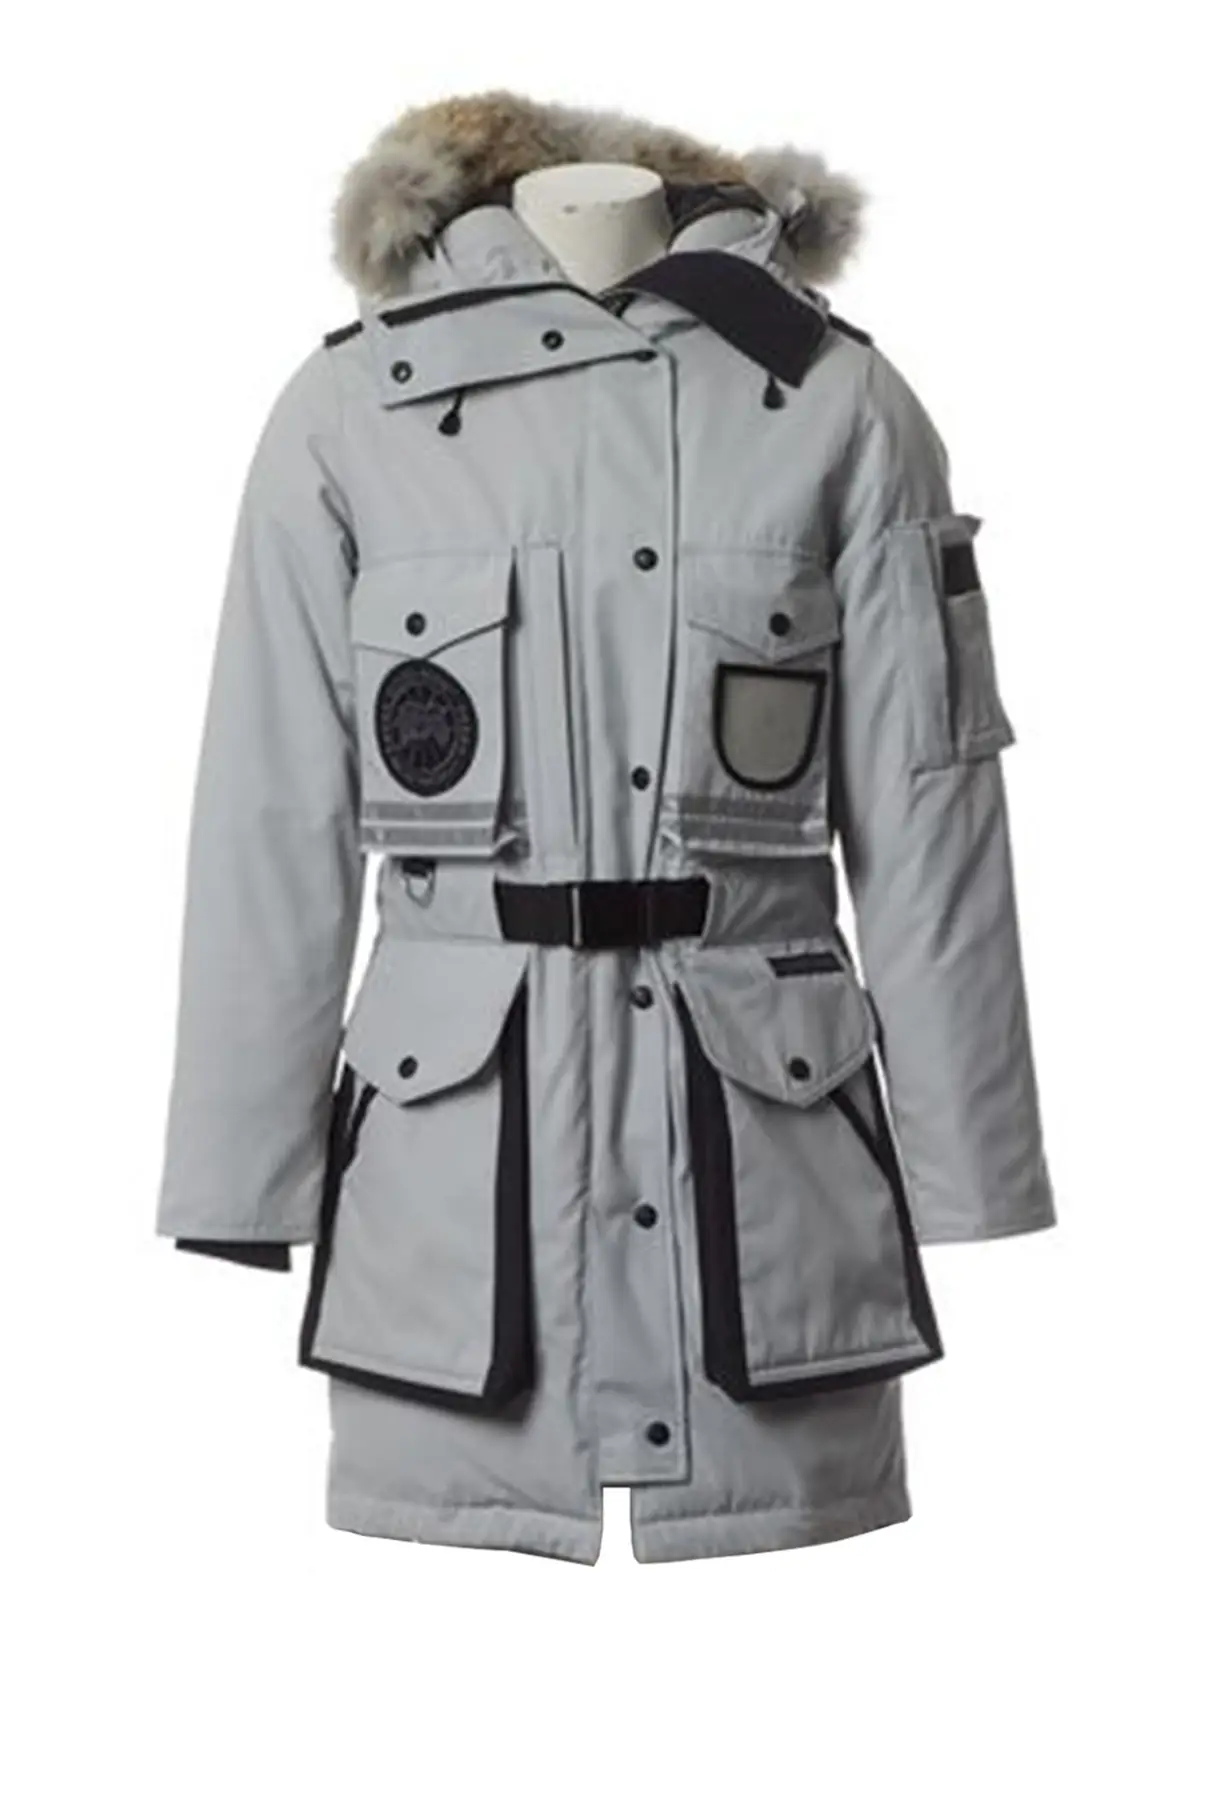 canada-dry-hivis-reflective-jacket.jpg